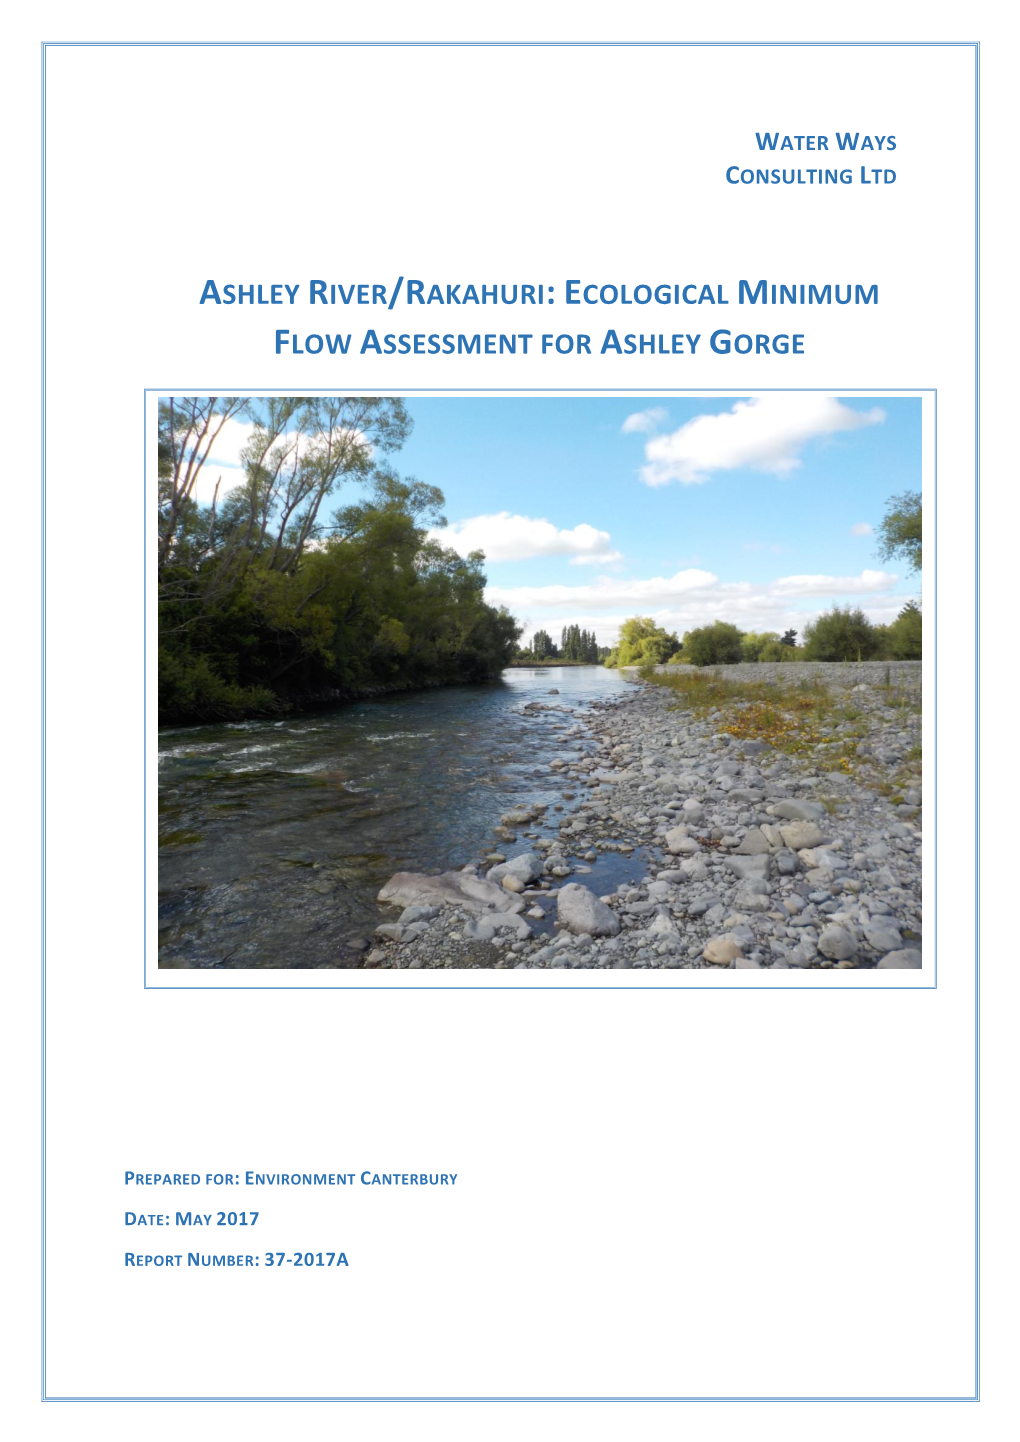 Ashley River/Rakahuri: Ecological Minimum Flow Assessment for Ashley Gorge